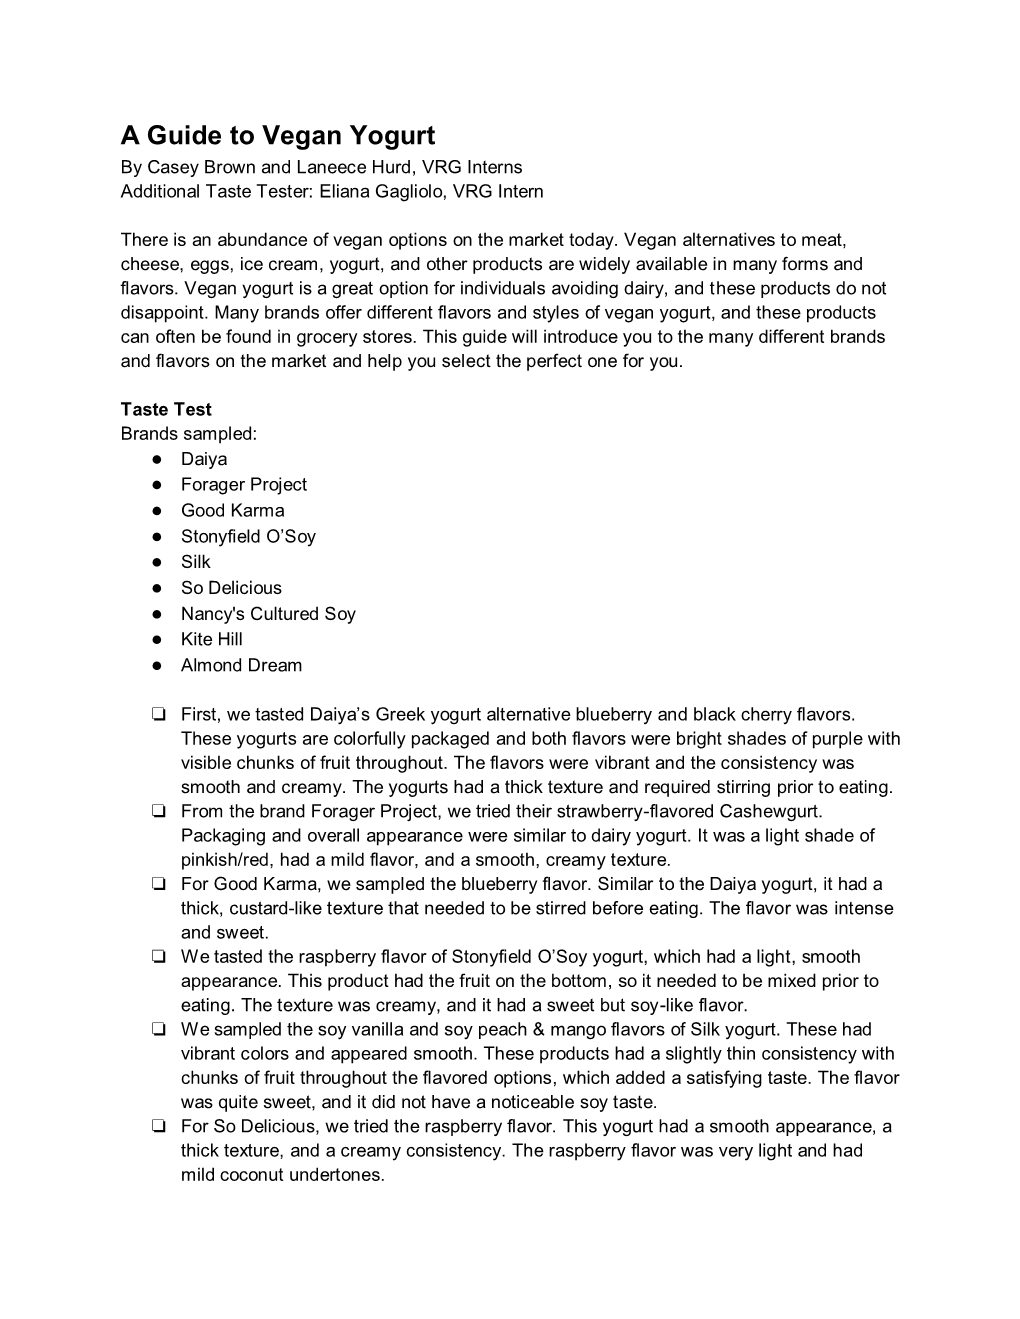 A Guide to Vegan Yogurt by Casey Brown and Laneece Hurd, VRG Interns Additional Taste Tester: Eliana Gagliolo, VRG Intern